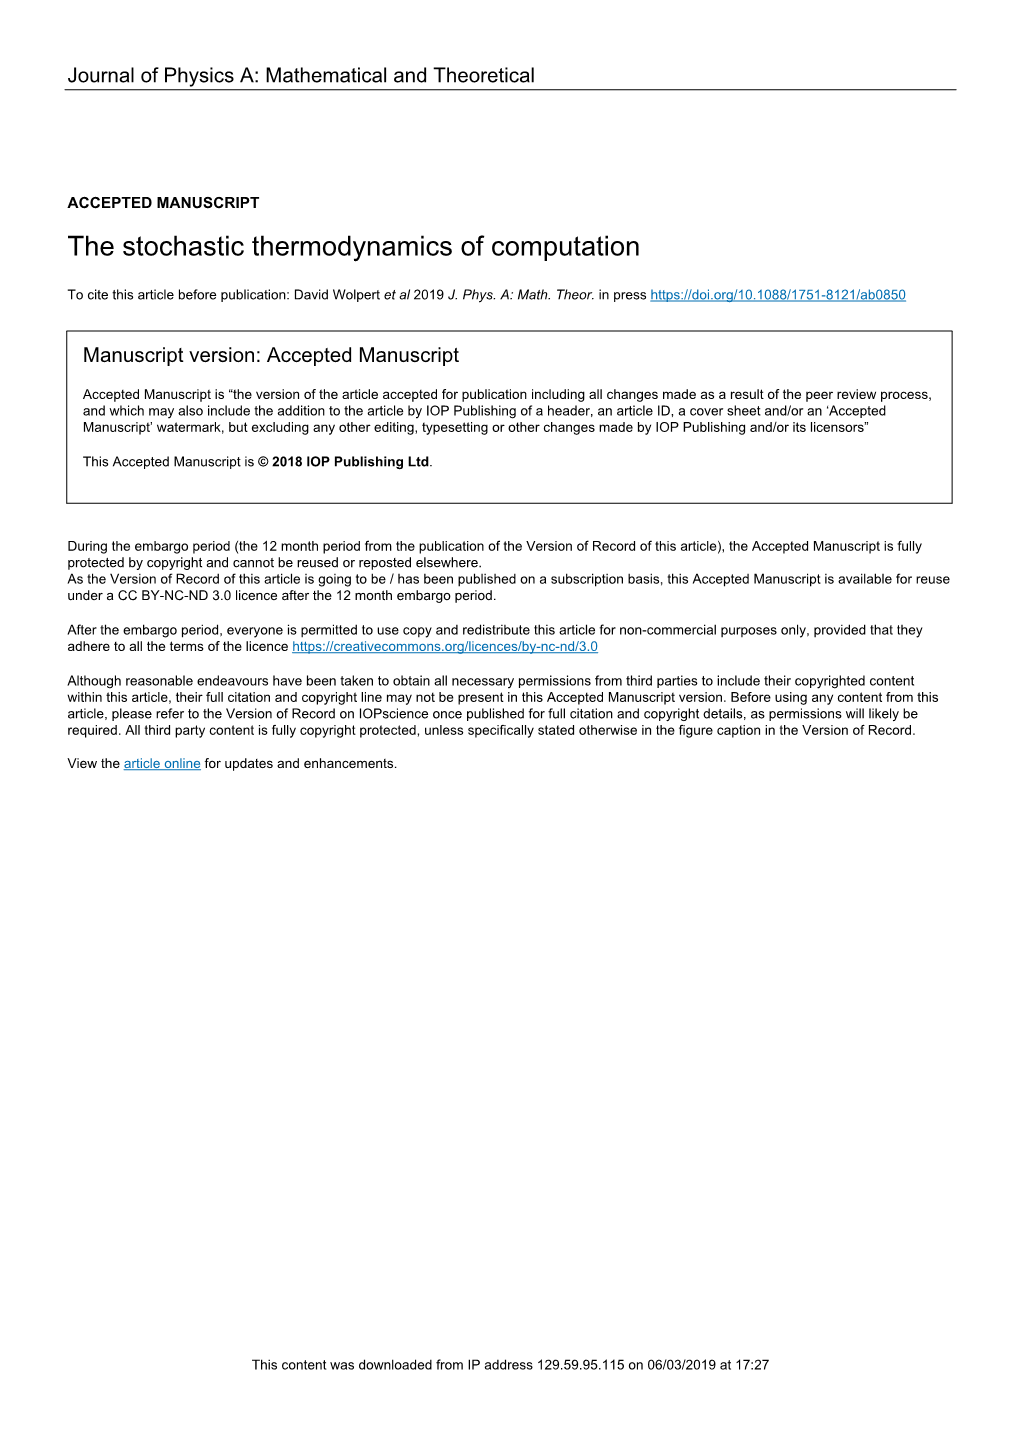 The Stochastic Thermodynamics of Computation